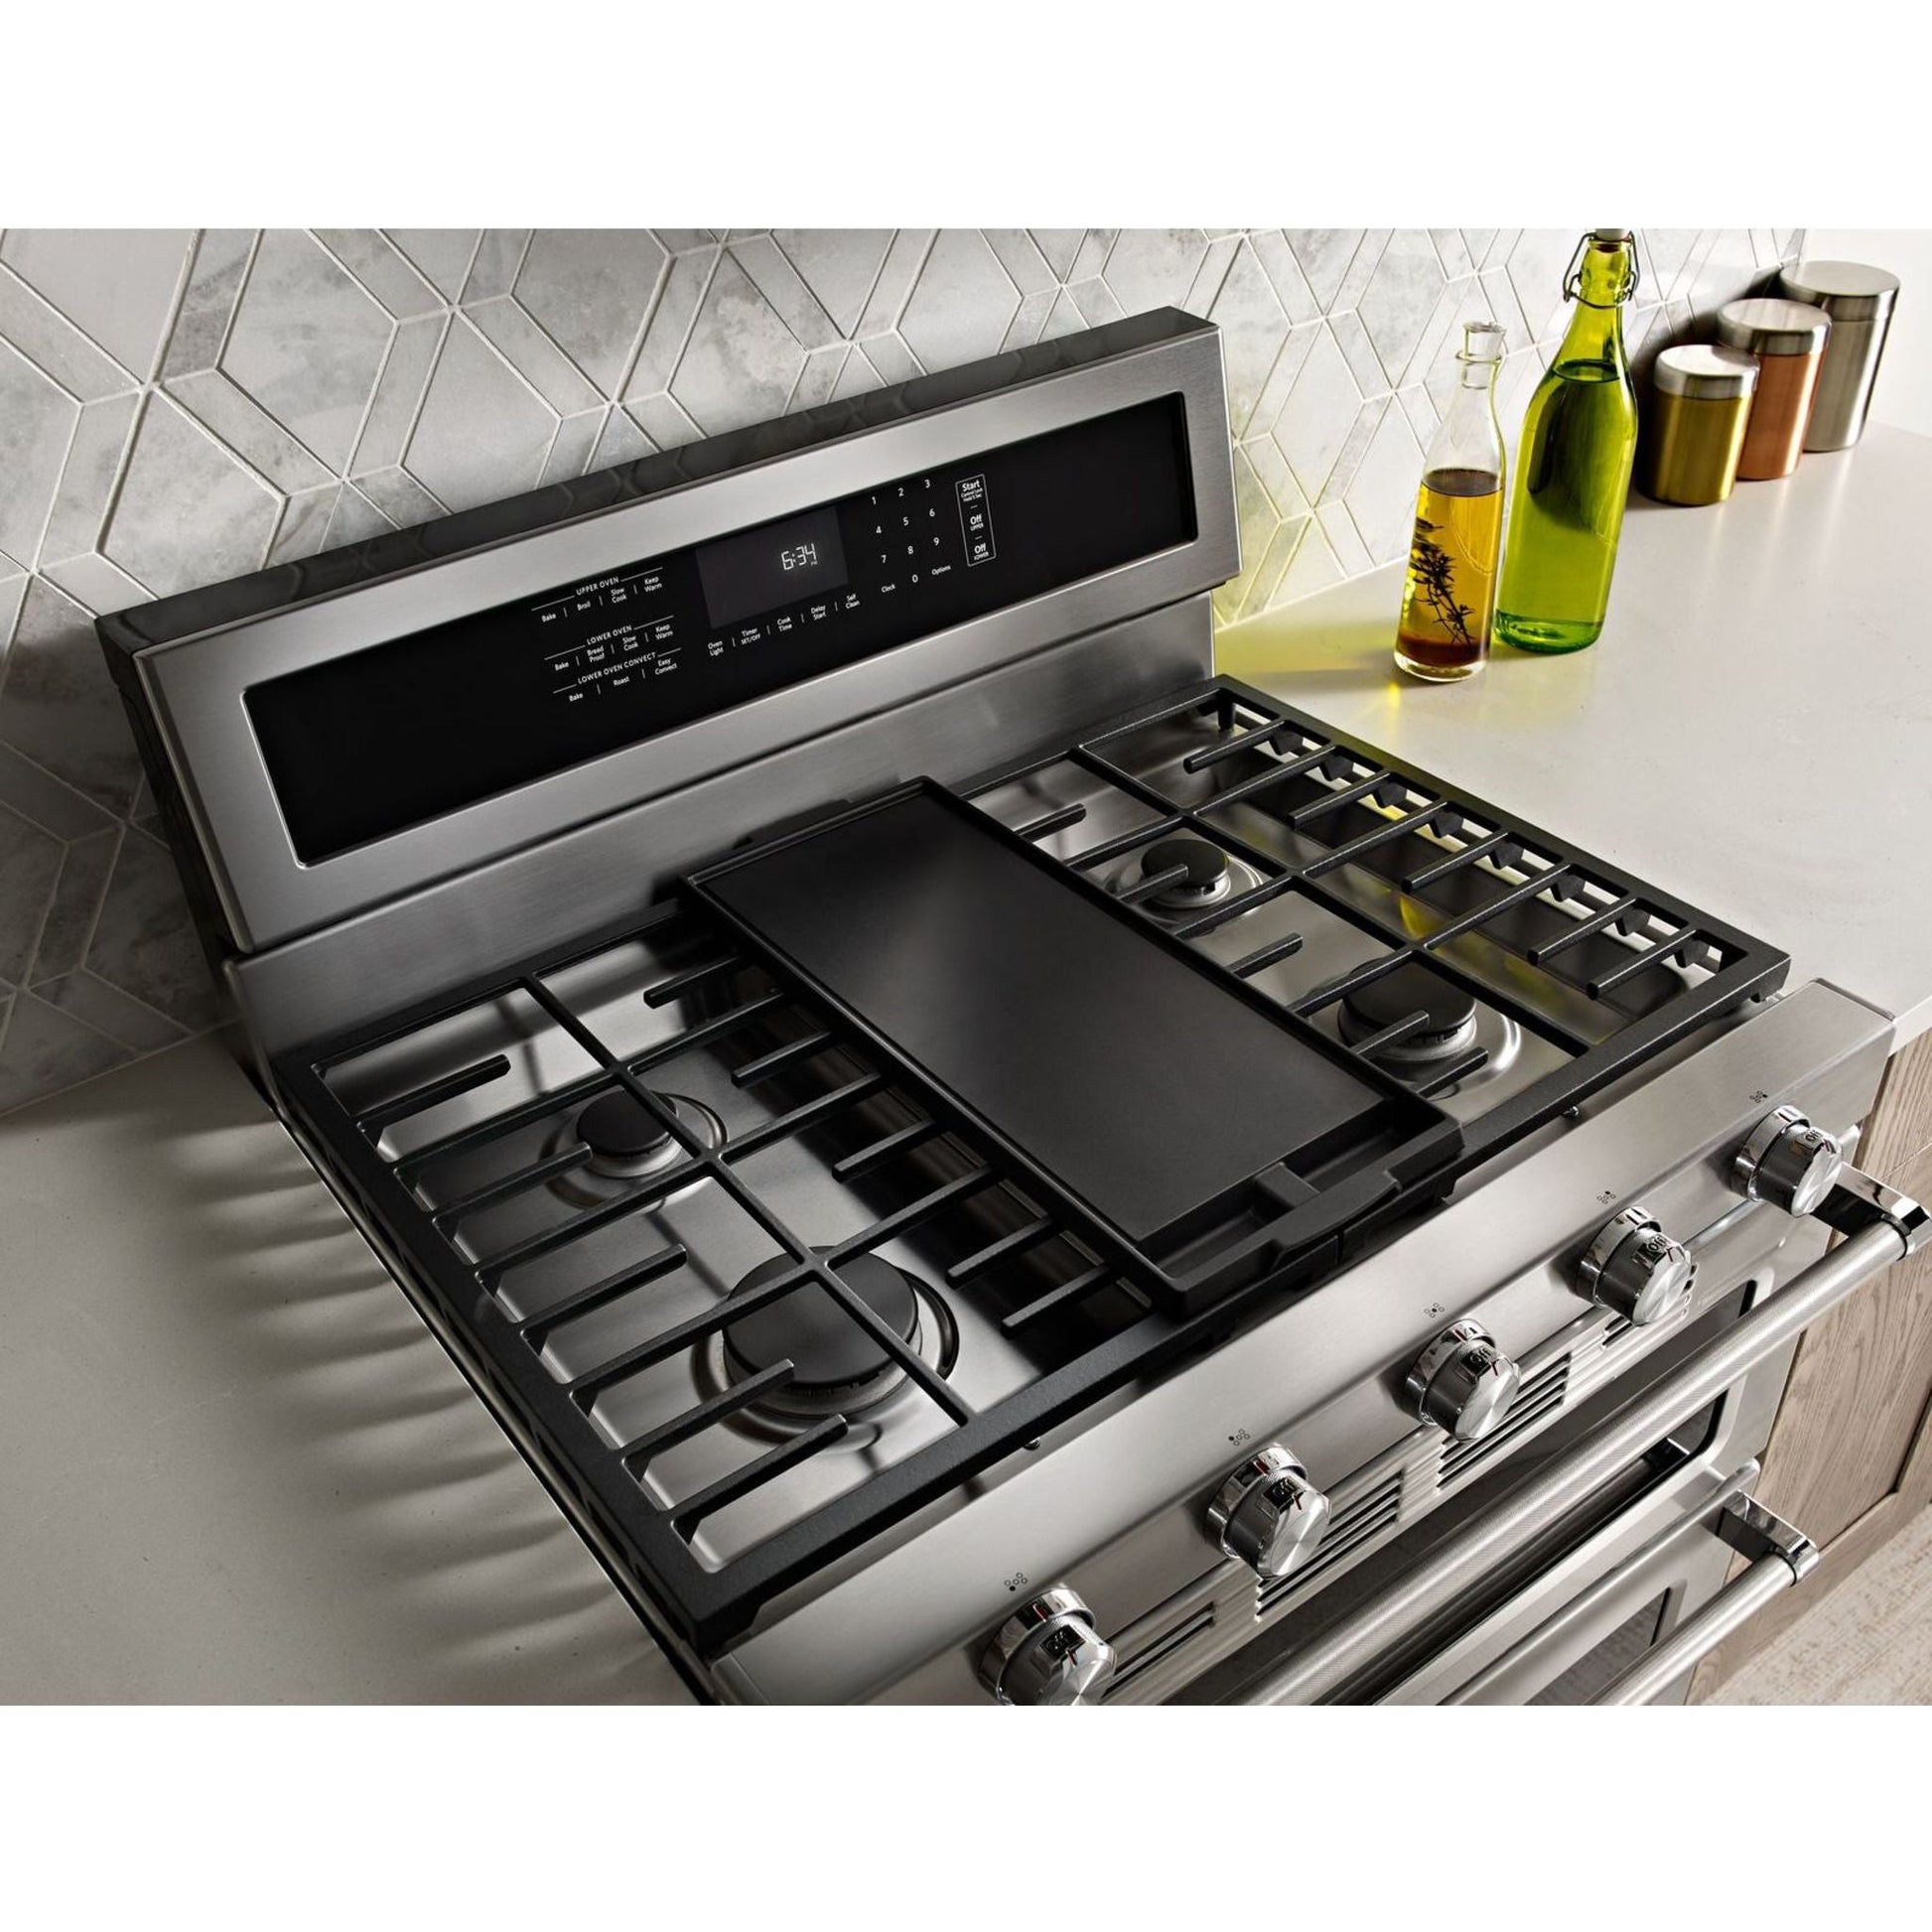 KitchenAid Double Oven Range (KFGD500ESS) - Stainless Steel